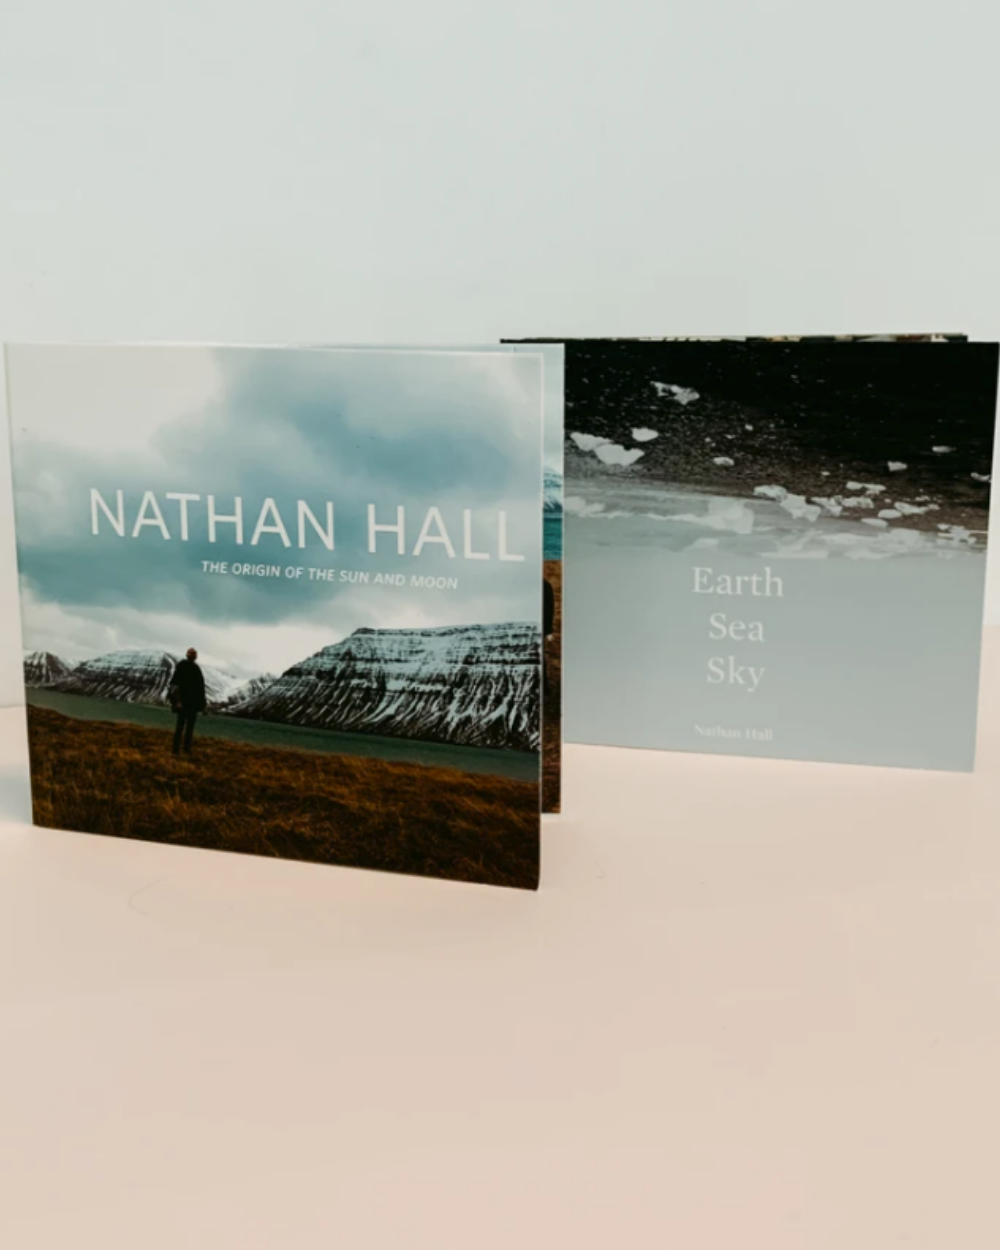 NATHAN HALL SOUNDSCAPE CD $15.00  